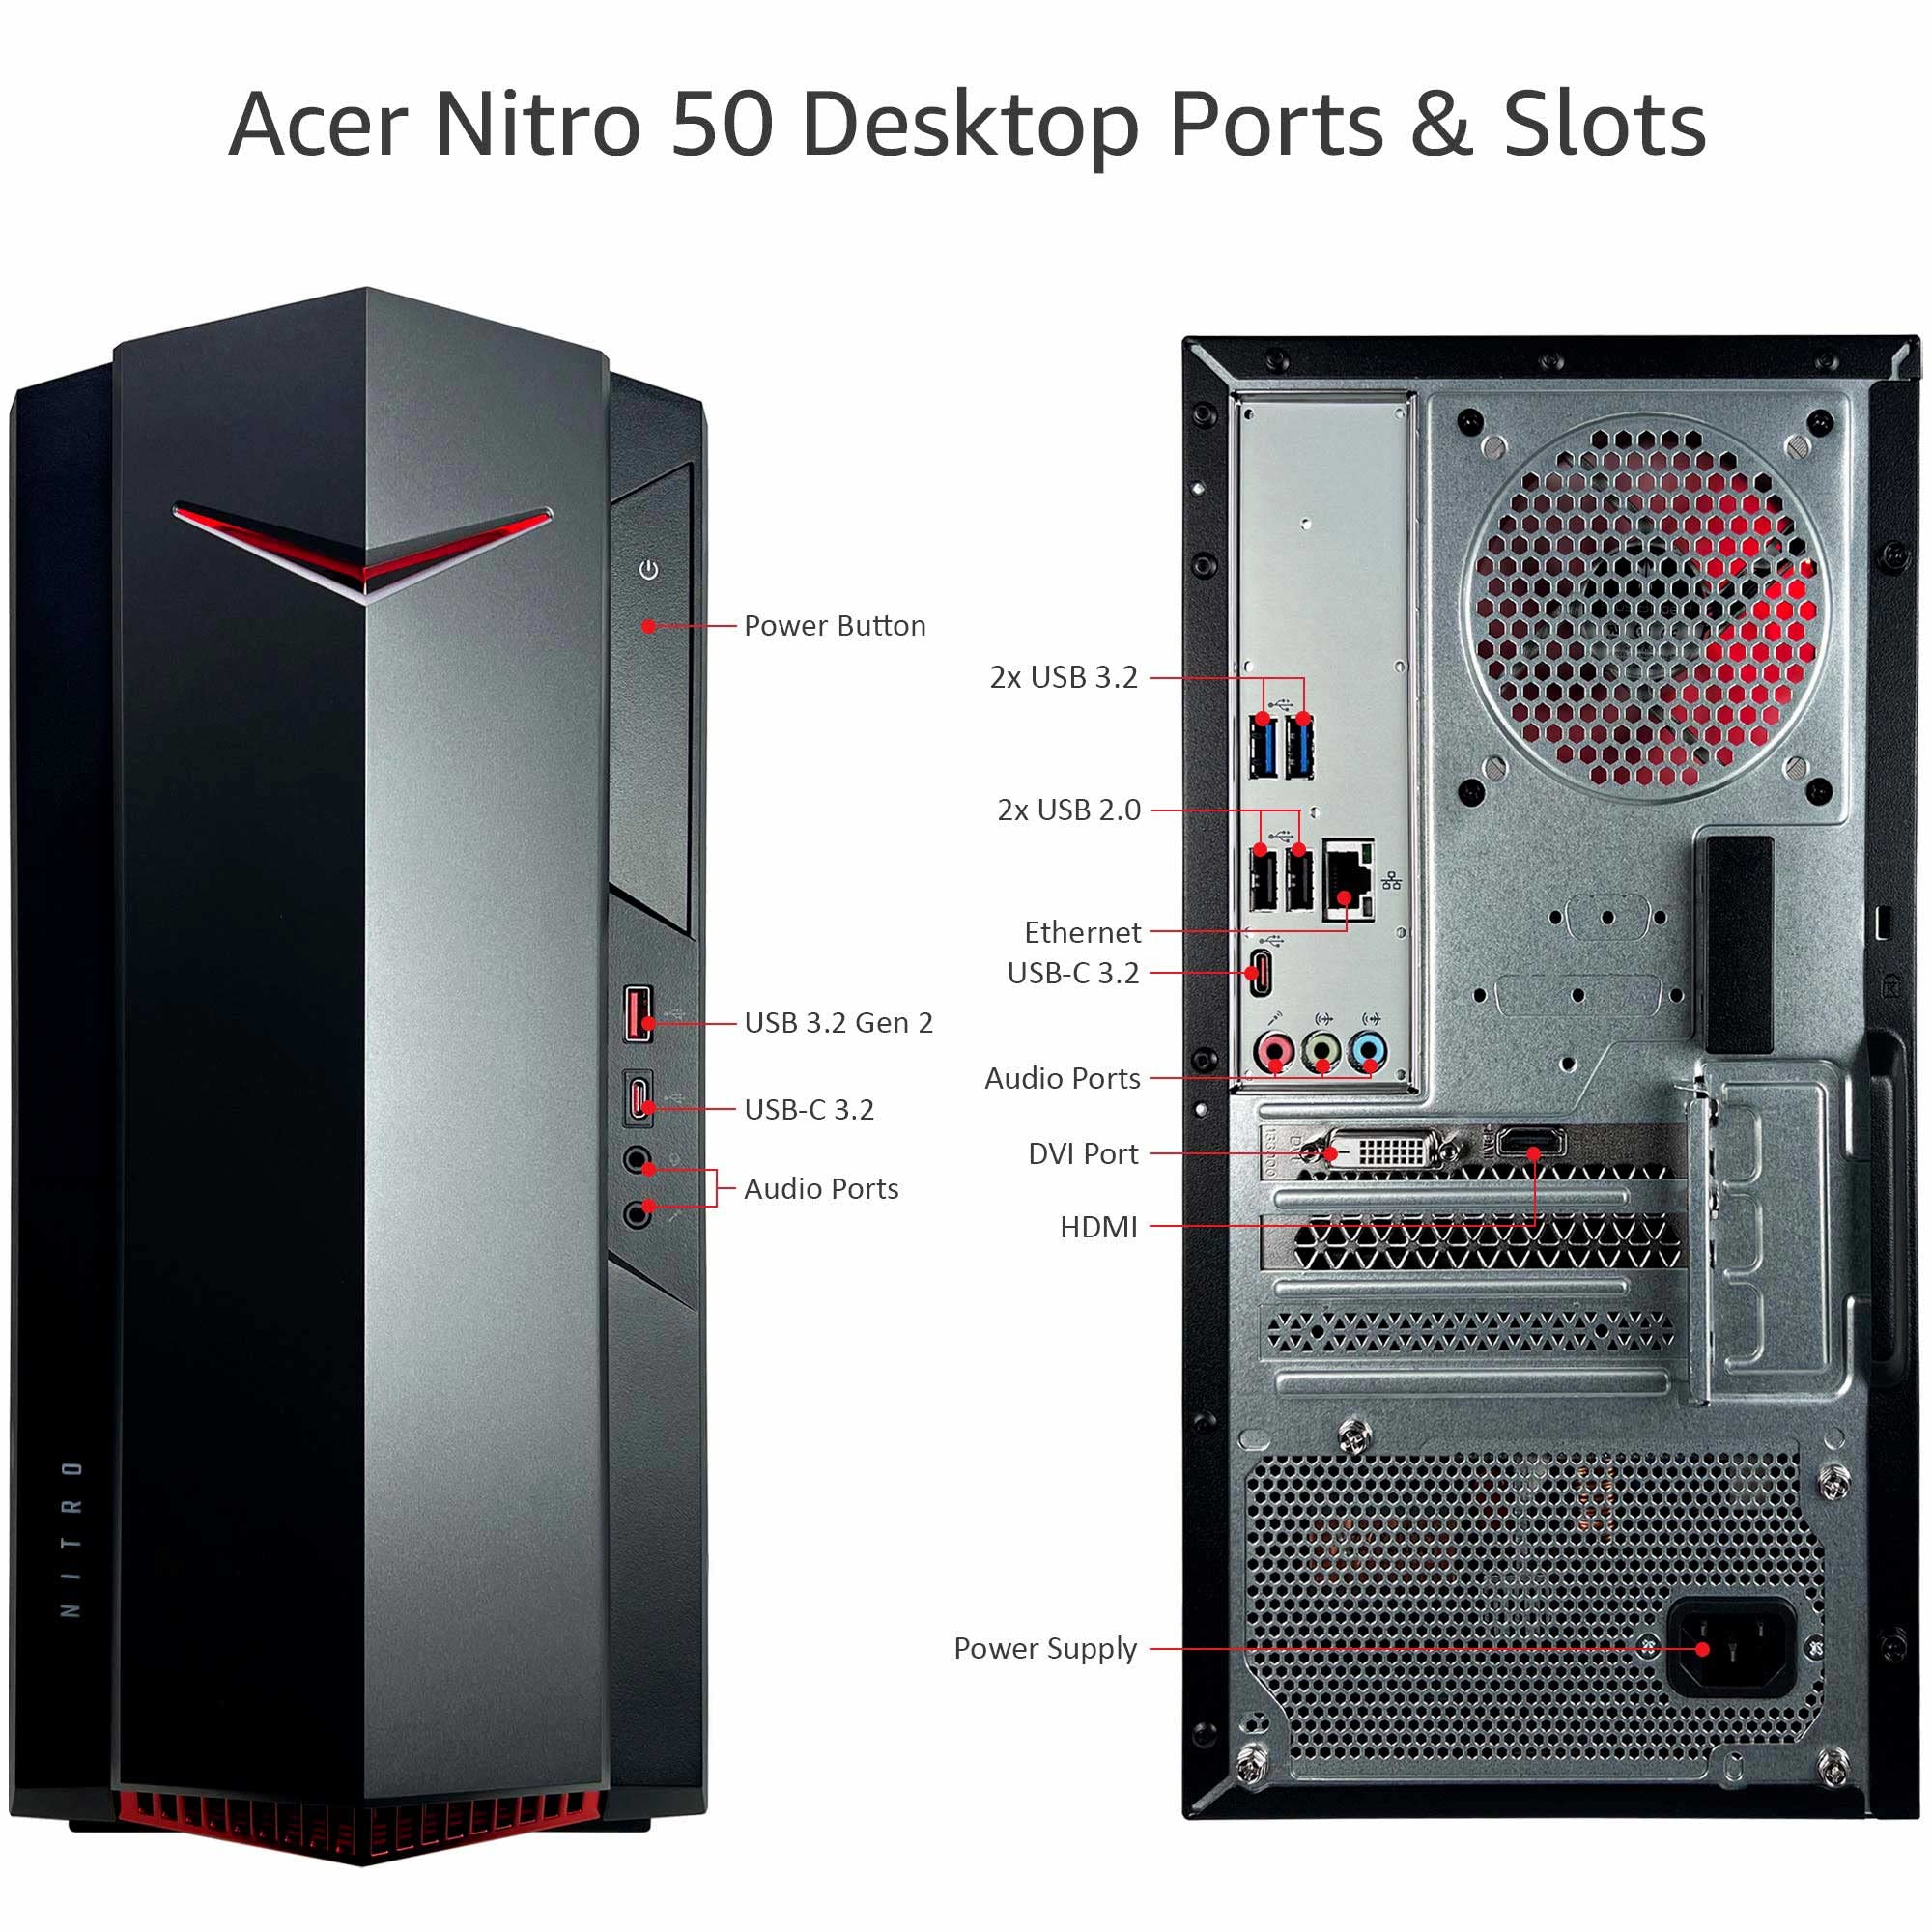 acer Nitro 50 N50 Gaming Desktop Computer - 12th Gen Intel Core i5-12400F 6-Core up to 4.40GHz CPU, 32GB RAM, 1TB NVMe SSD + 2TB HDD, GeForce GTX 1650 4GB Graphics, Intel Wi-Fi 6, Windows 11 Home